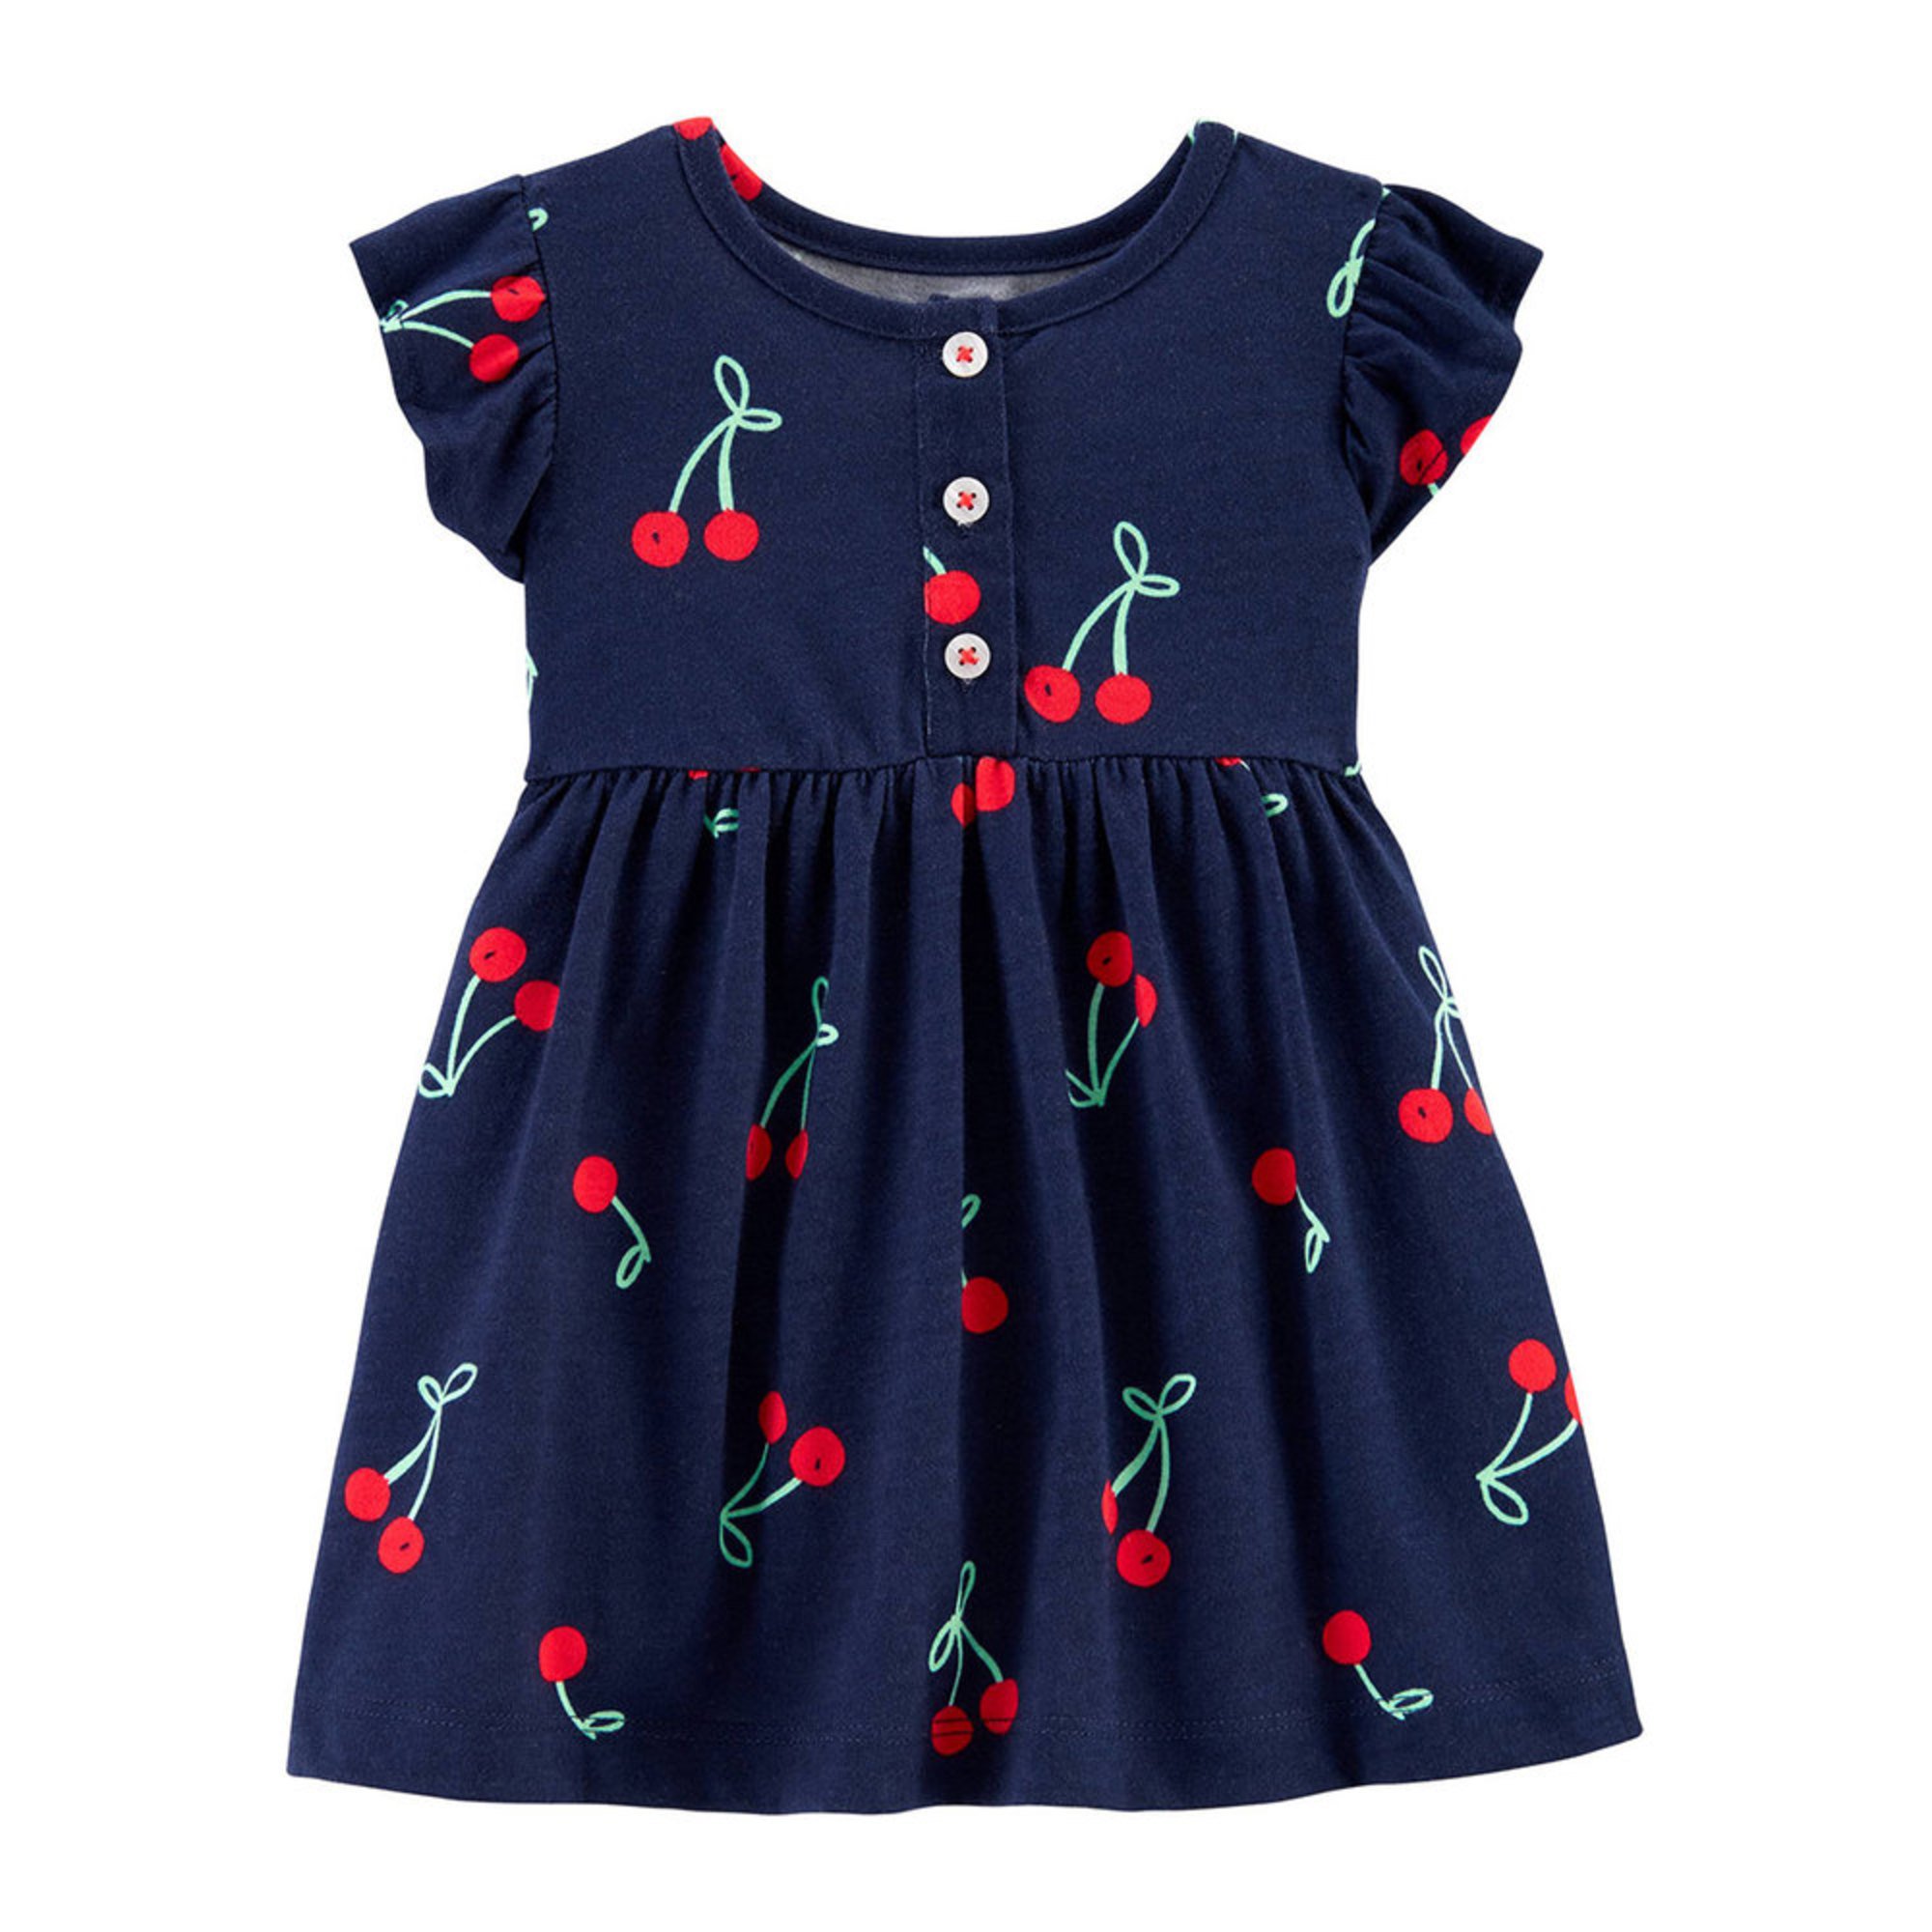 Carters Baby Girls' Cherries Dress 